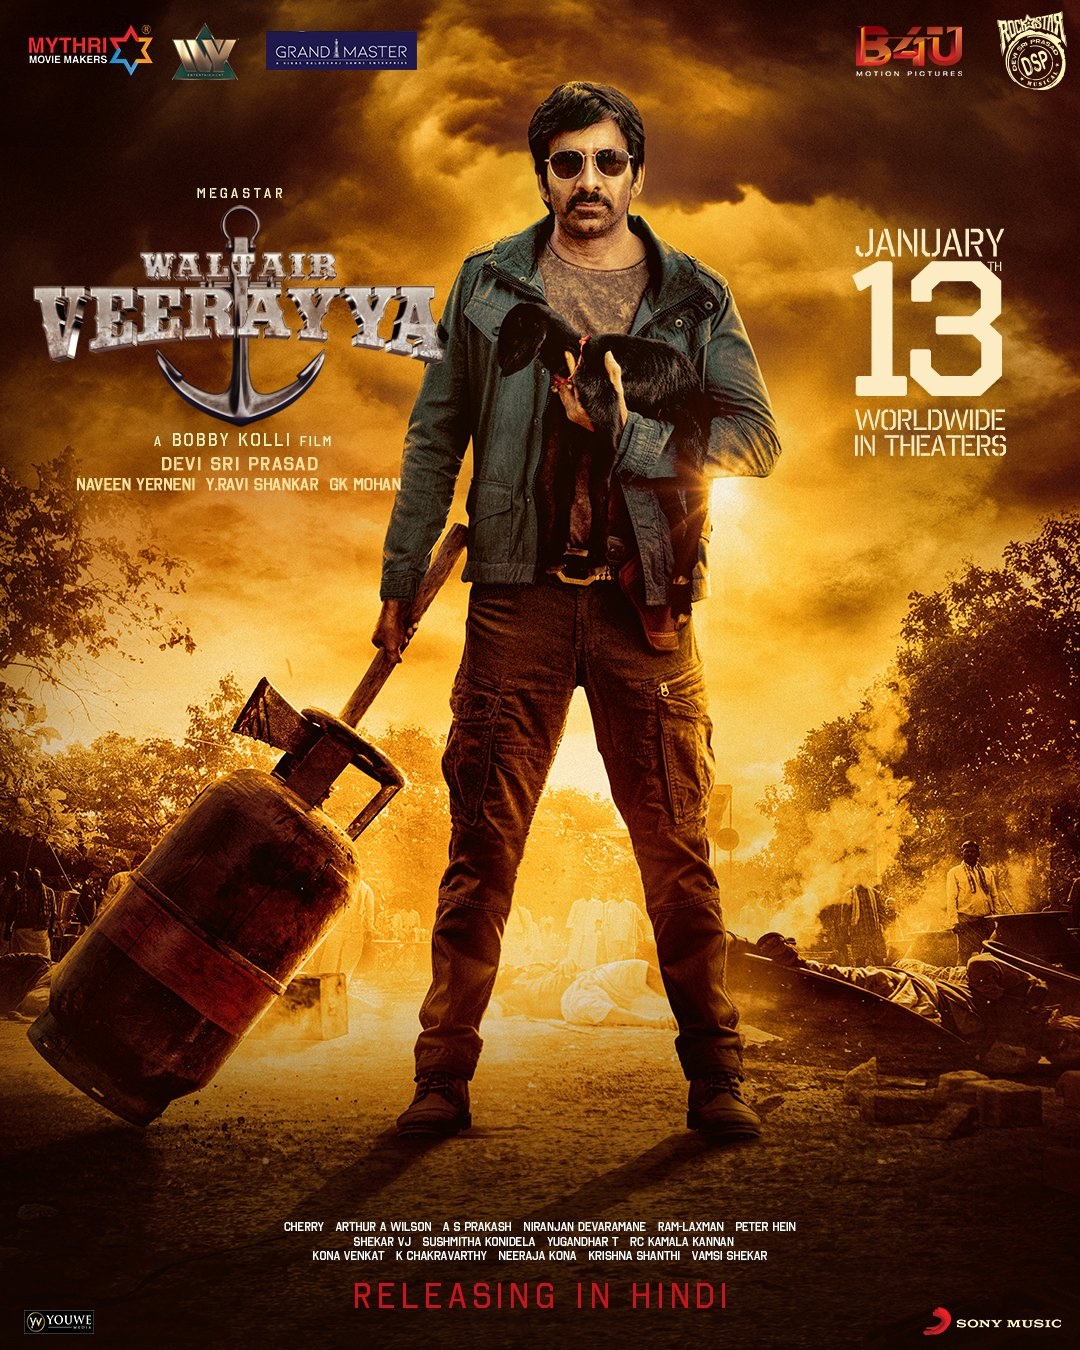 Waltair Veerayya: An Original Telugu Film Full of Action, Emotion, and Nostalgia